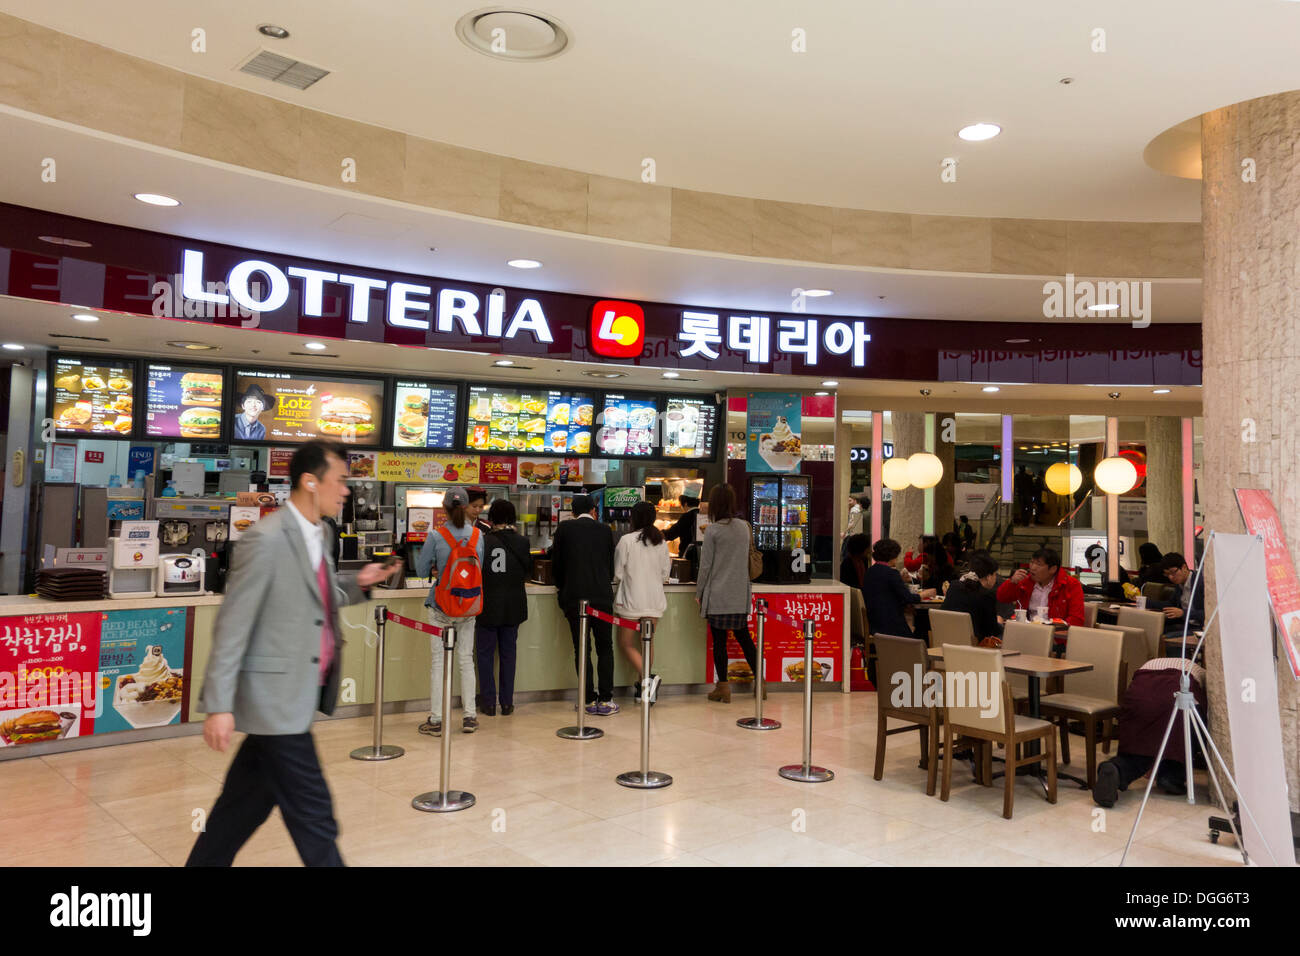 Lotteria fast food chain restaurant in Seoul, Korea Stock Photo